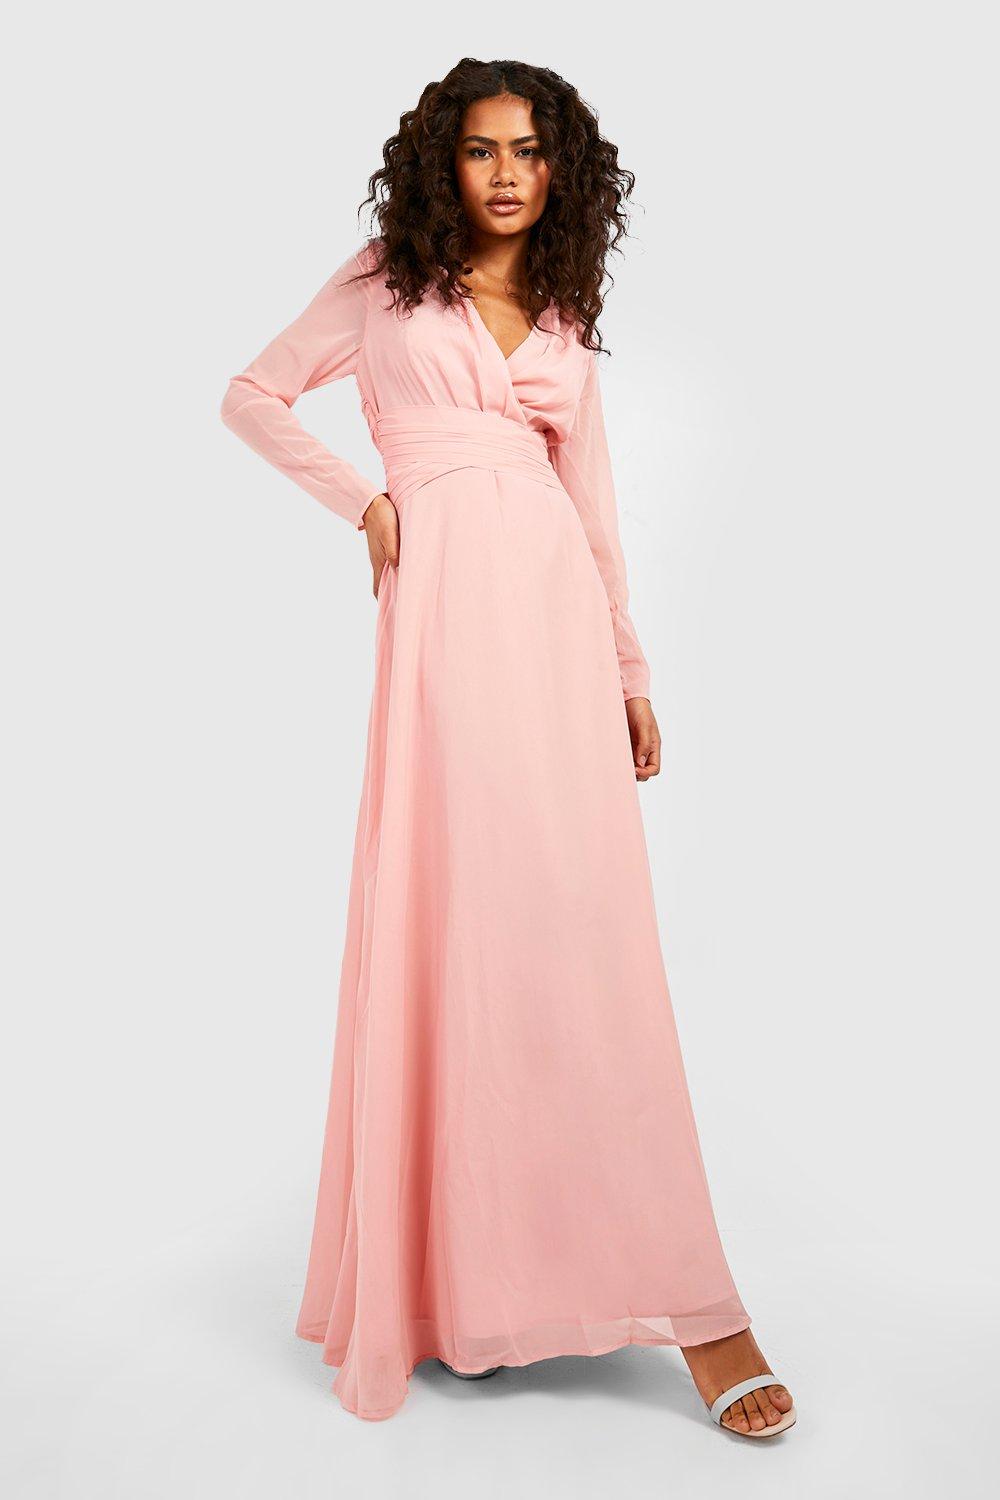 Pink long Sleeve Dress maxi